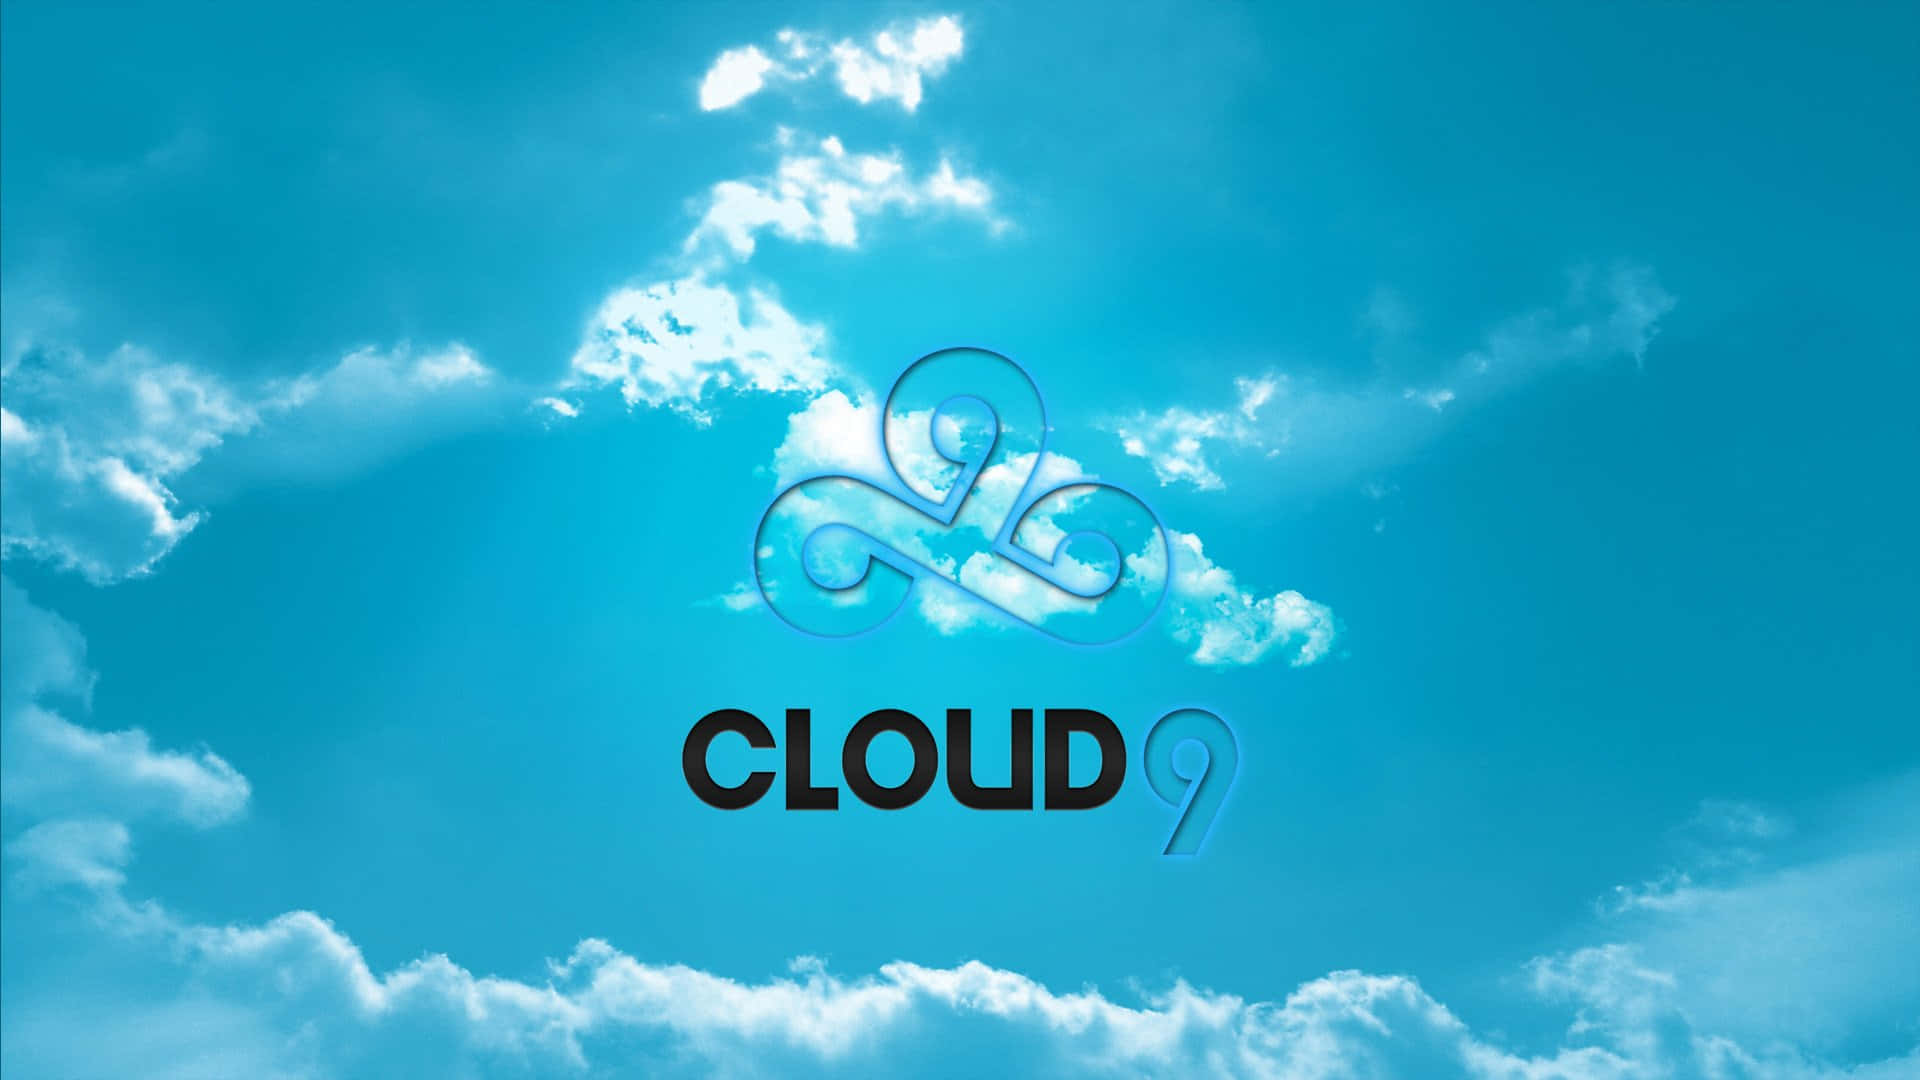 Enjoying a Day in the Cloud 9 Wallpaper